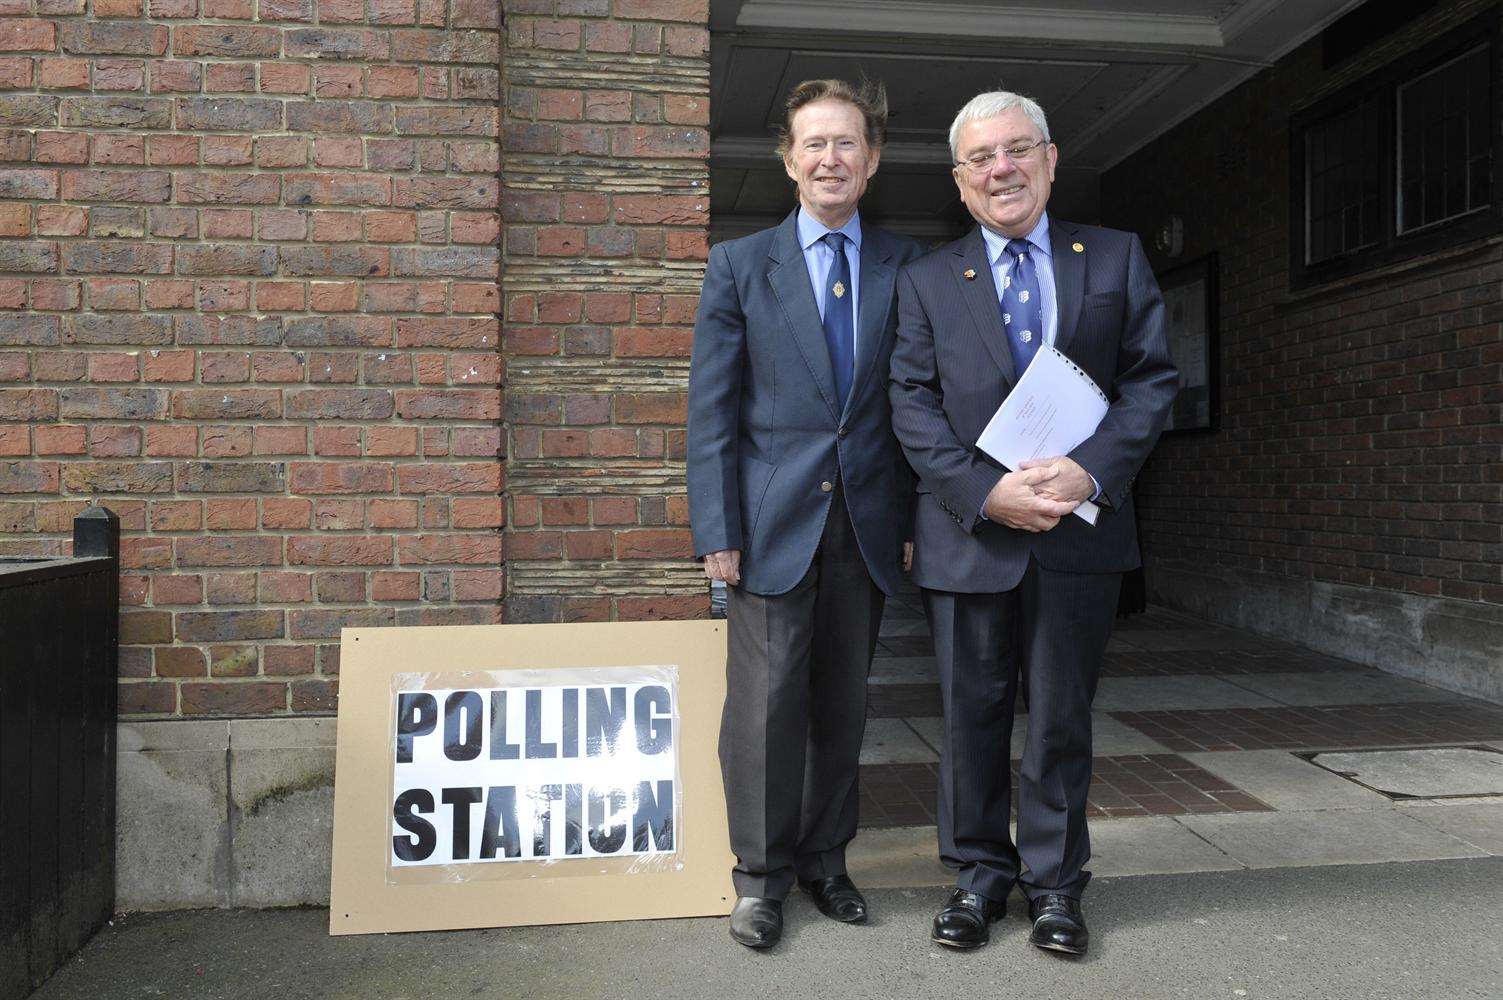 Former councillor Bernard Butcher and Cllr Paul Graeme casting their votes